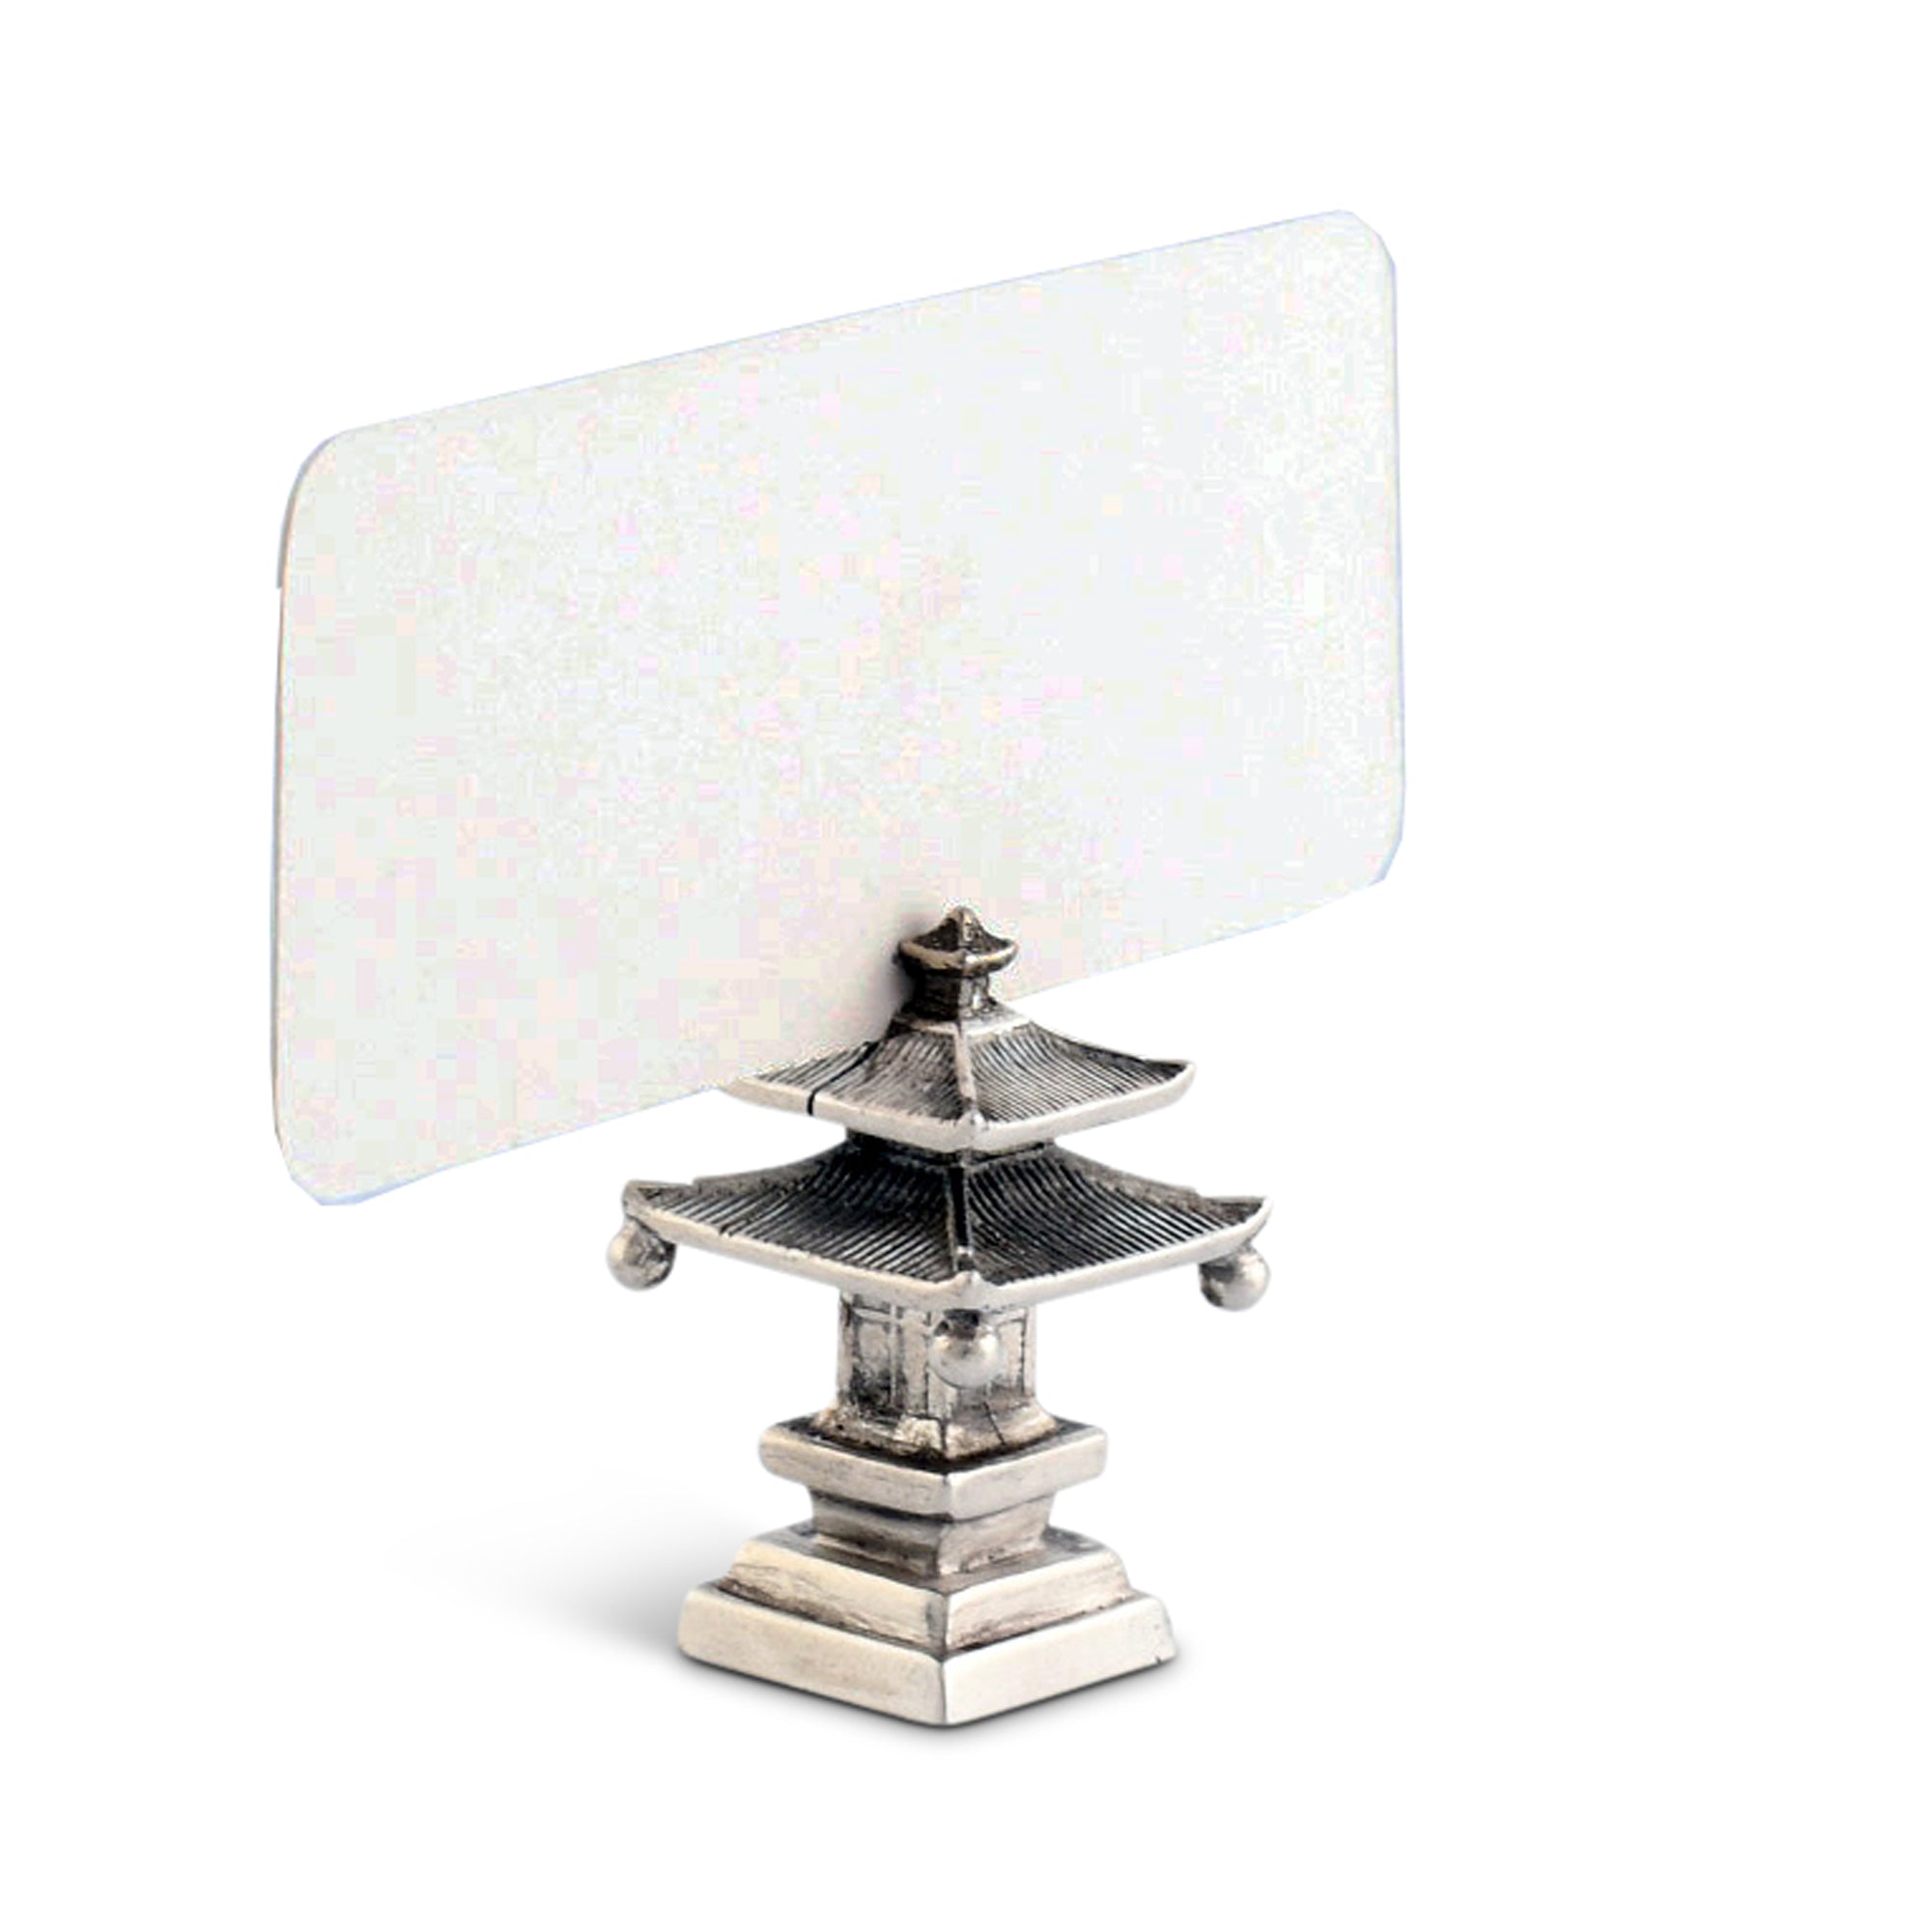 Vagabond House Pagoda Placecard Holder Product Image